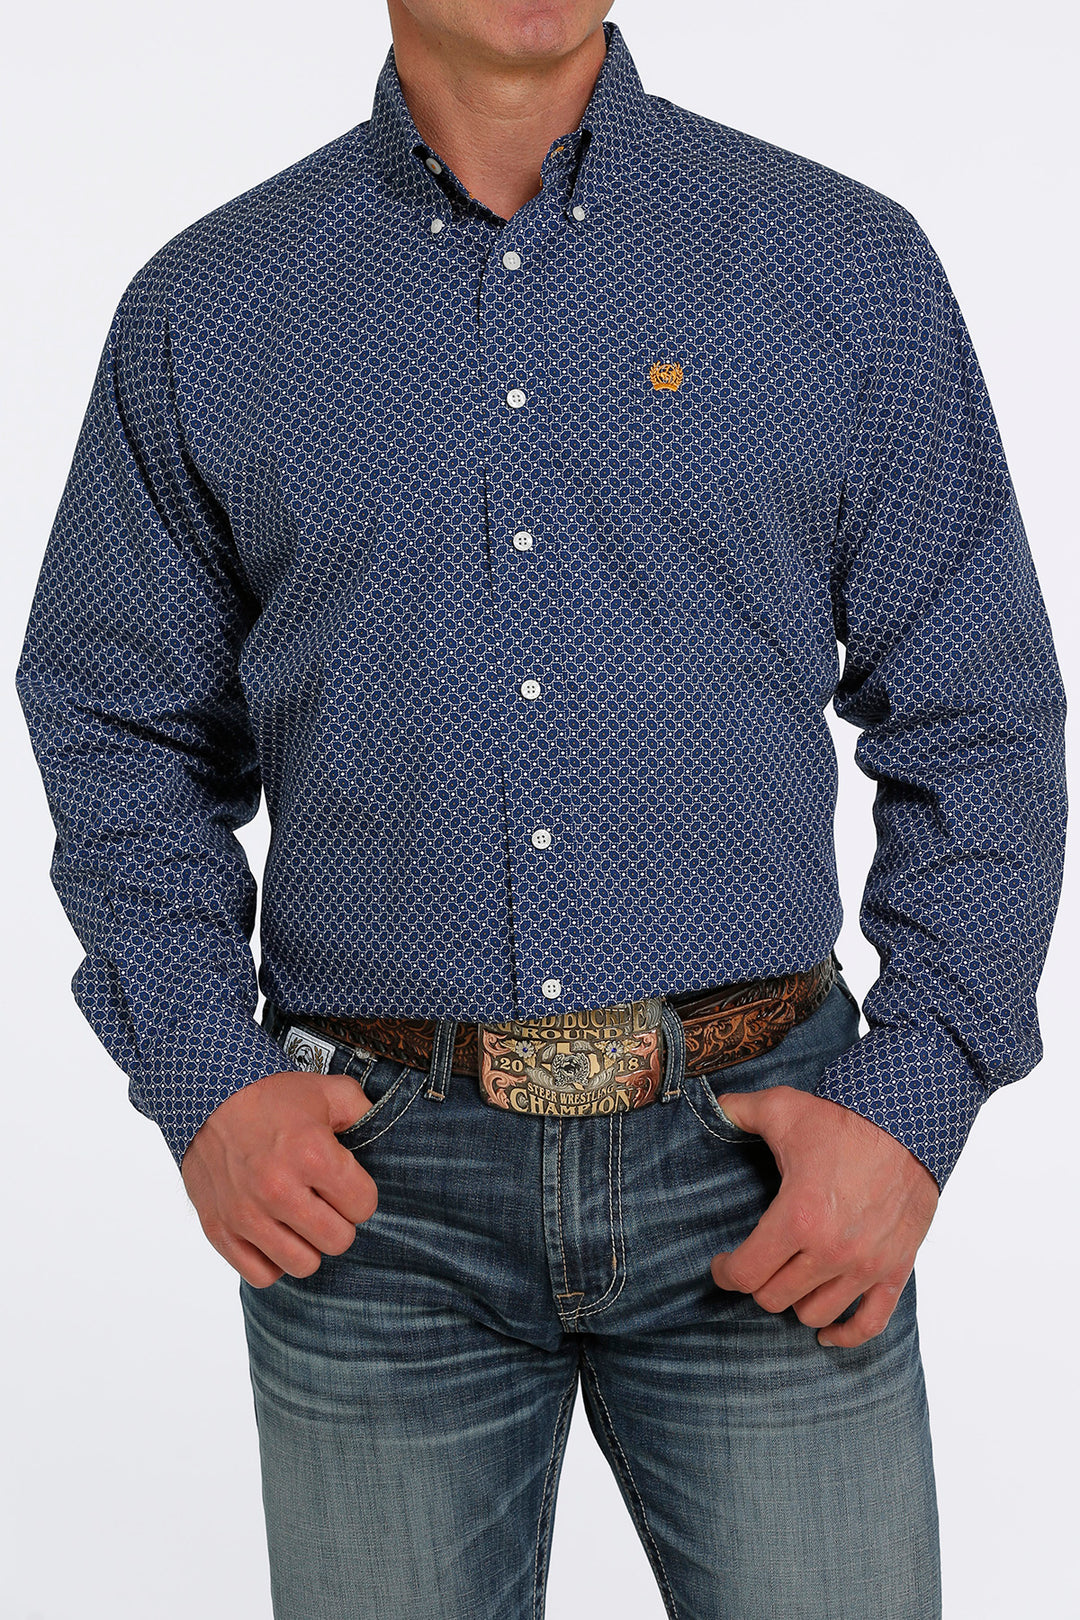 Camicia da uomo con stampa geografica blu a maniche lunghe Cinch - MTW1105447